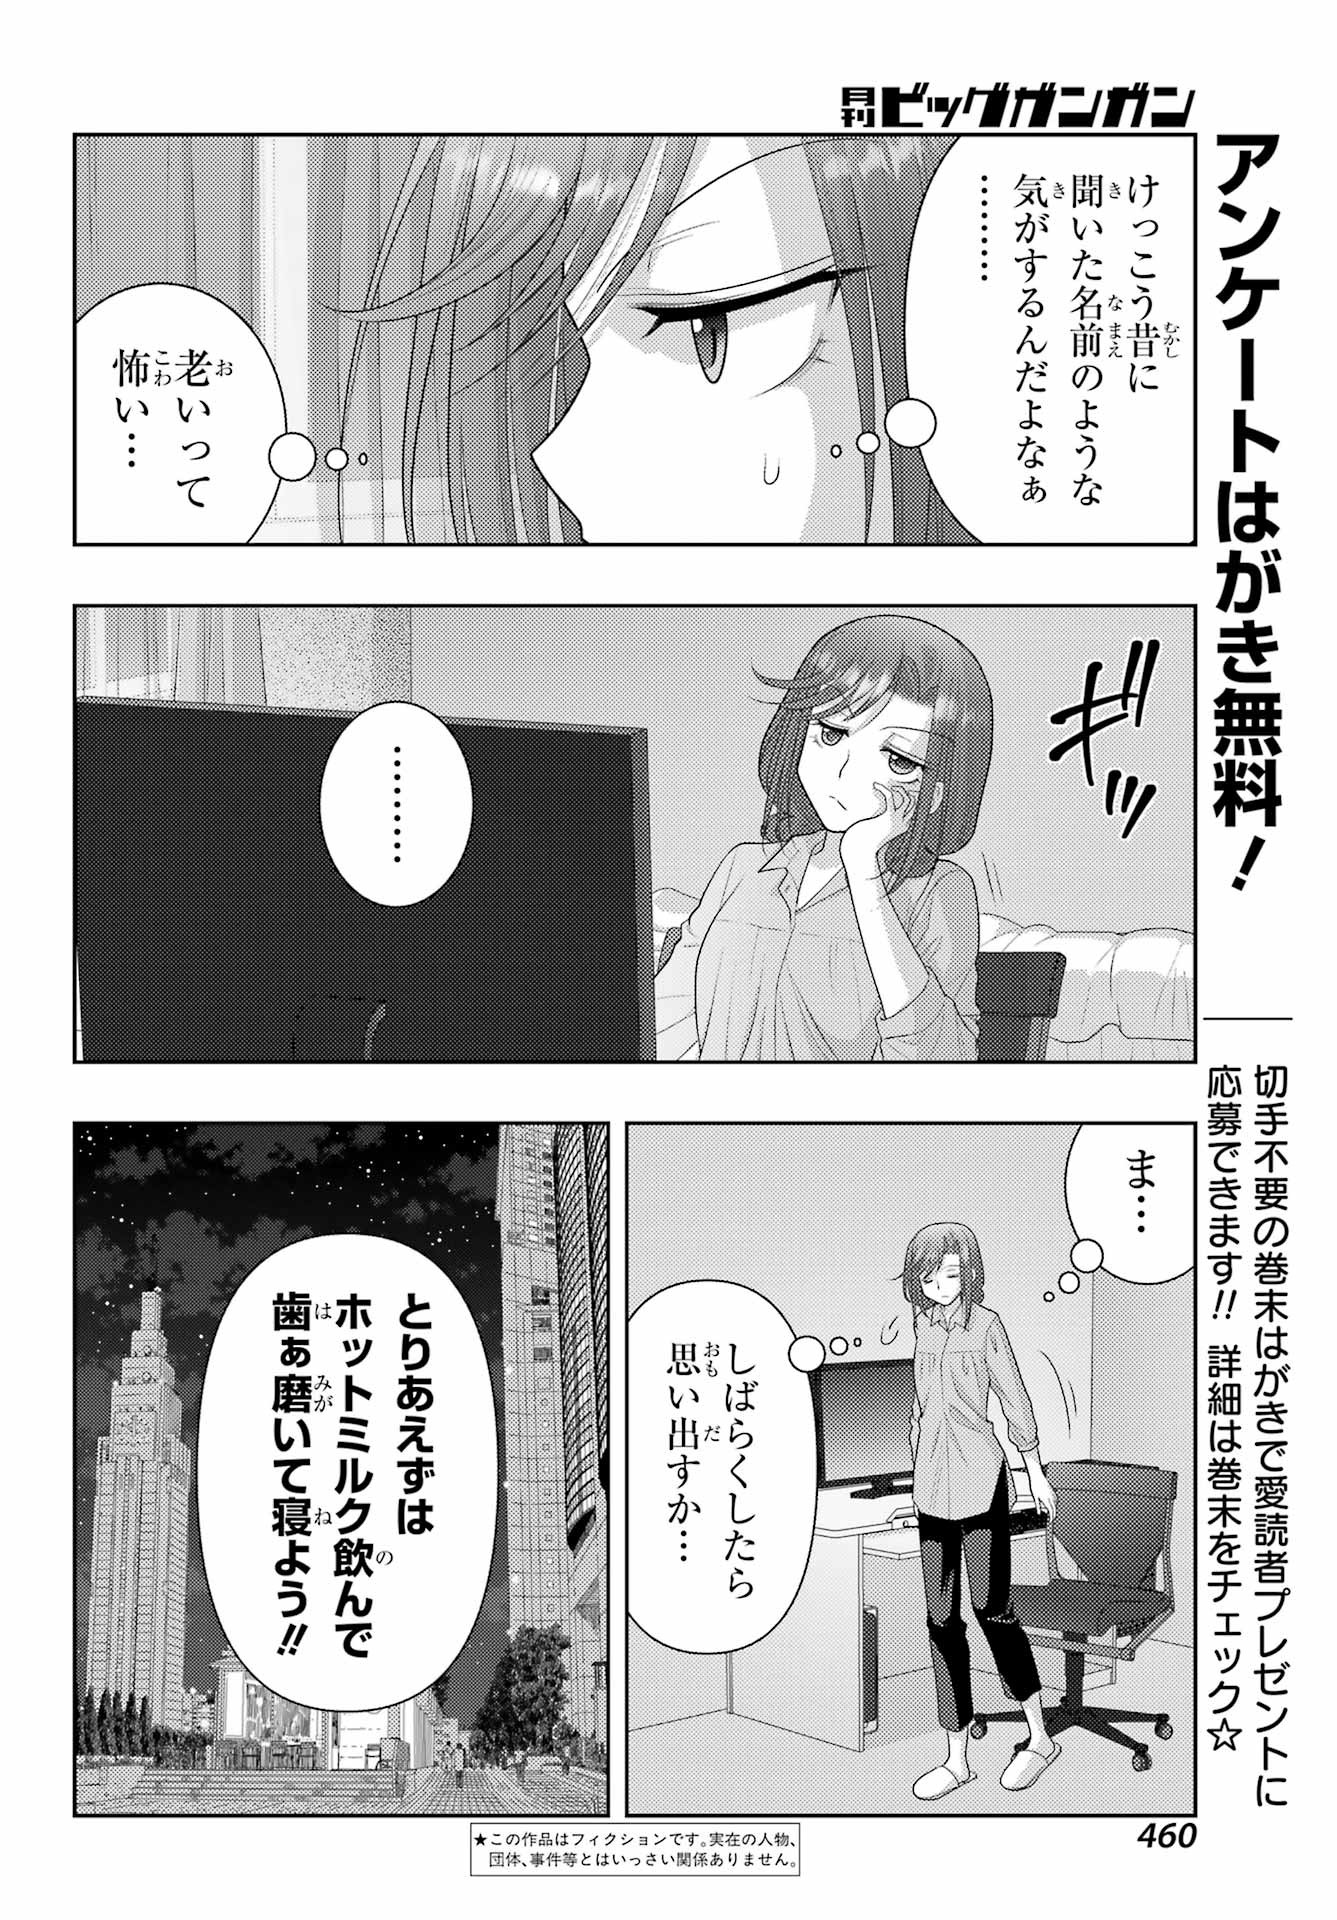 Shinohayu - The Dawn of Age Manga - Chapter 110 - Page 2